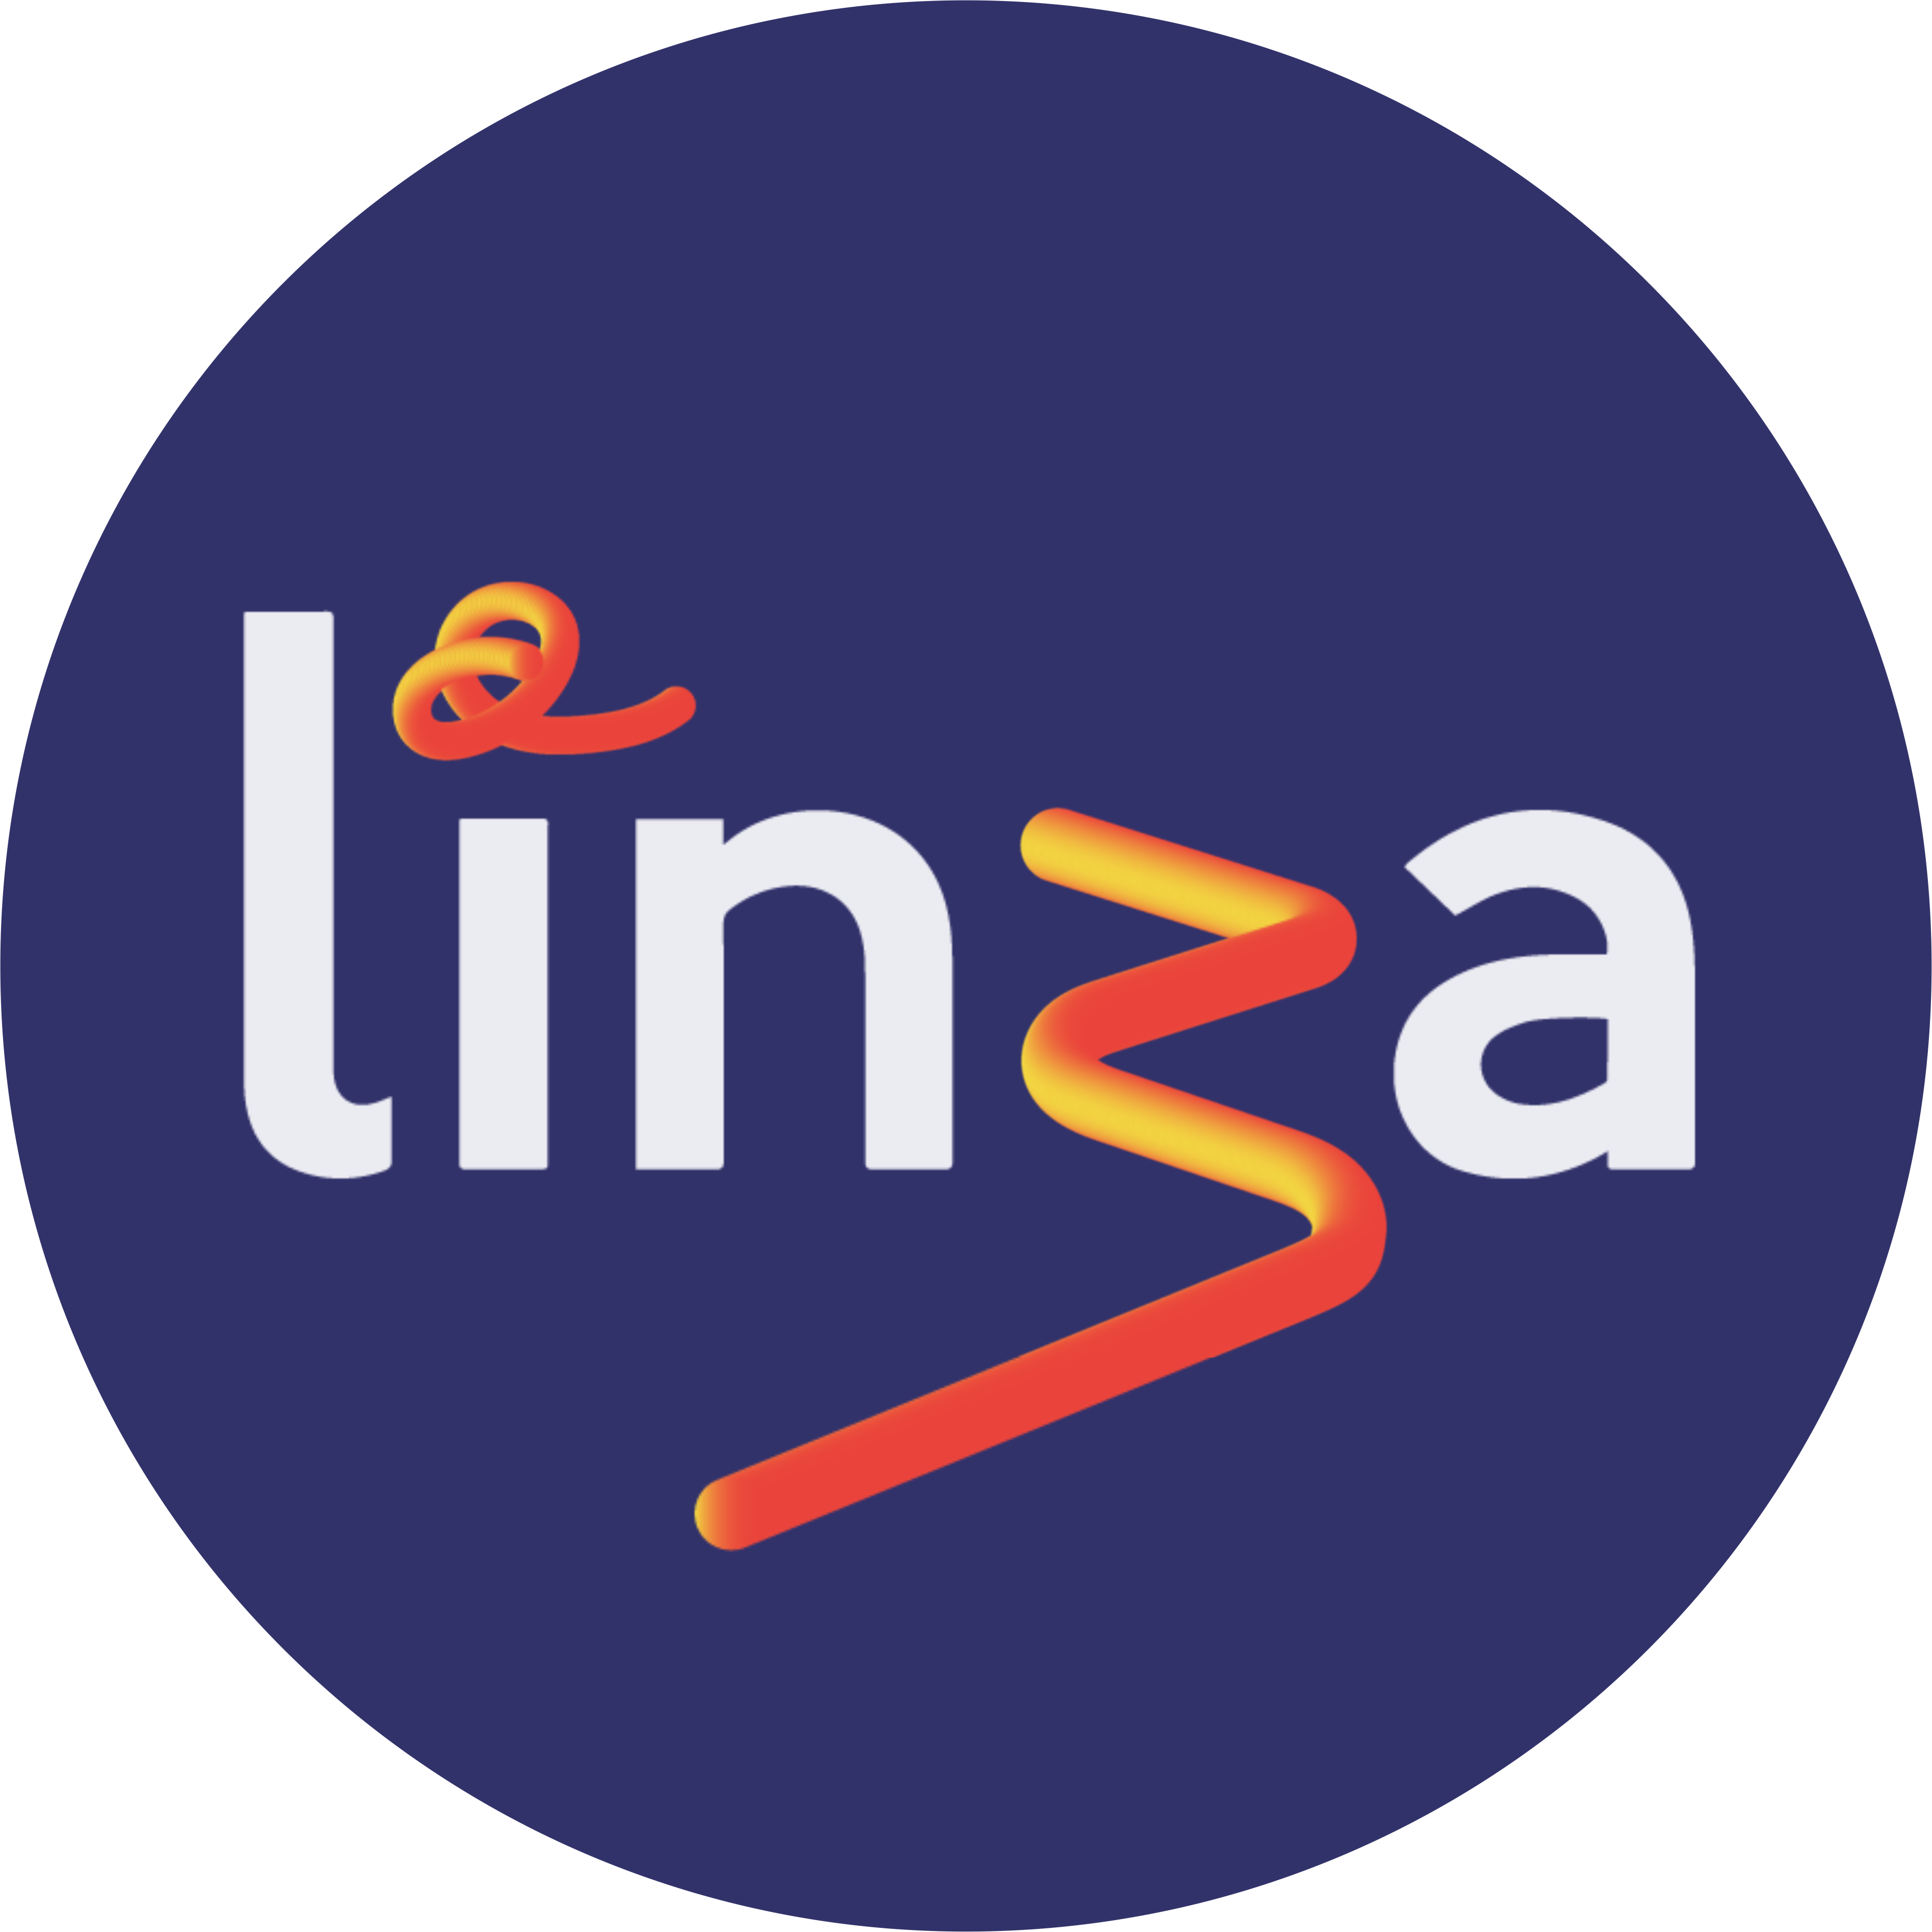 linza agency